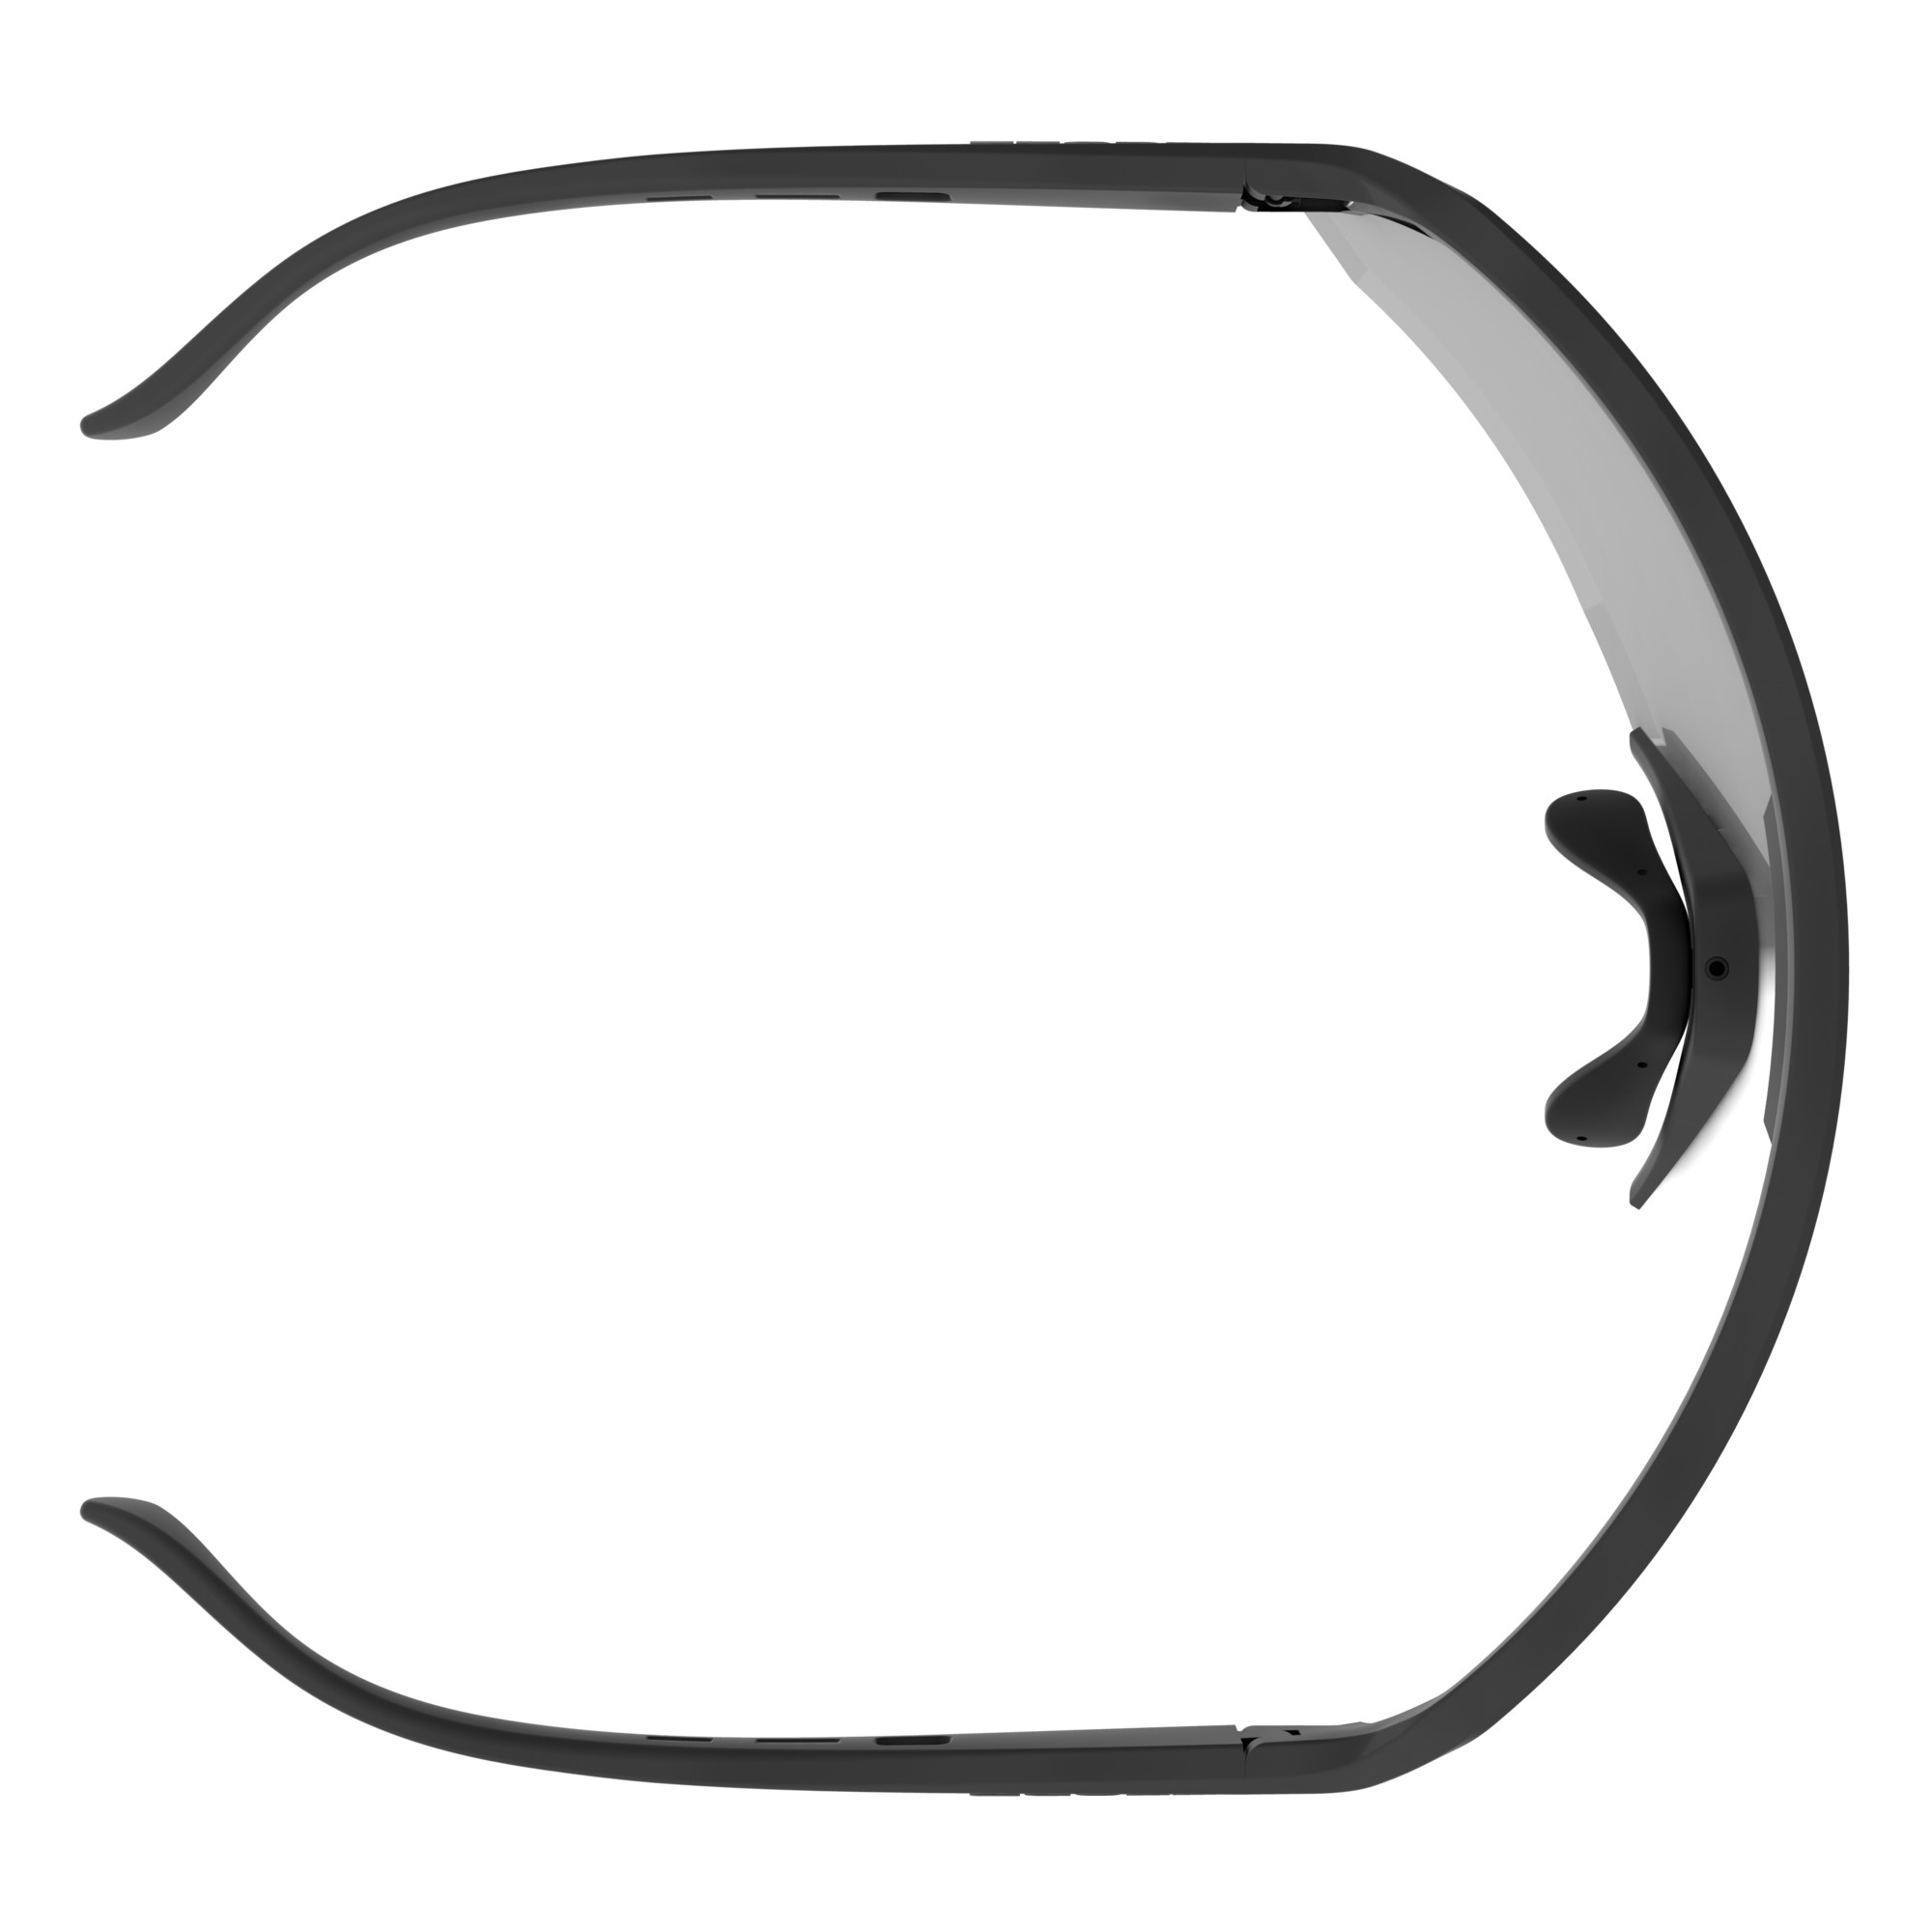 Beklædning - Cykelbriller - Scott Sport Shield Cykelbrille - Sort